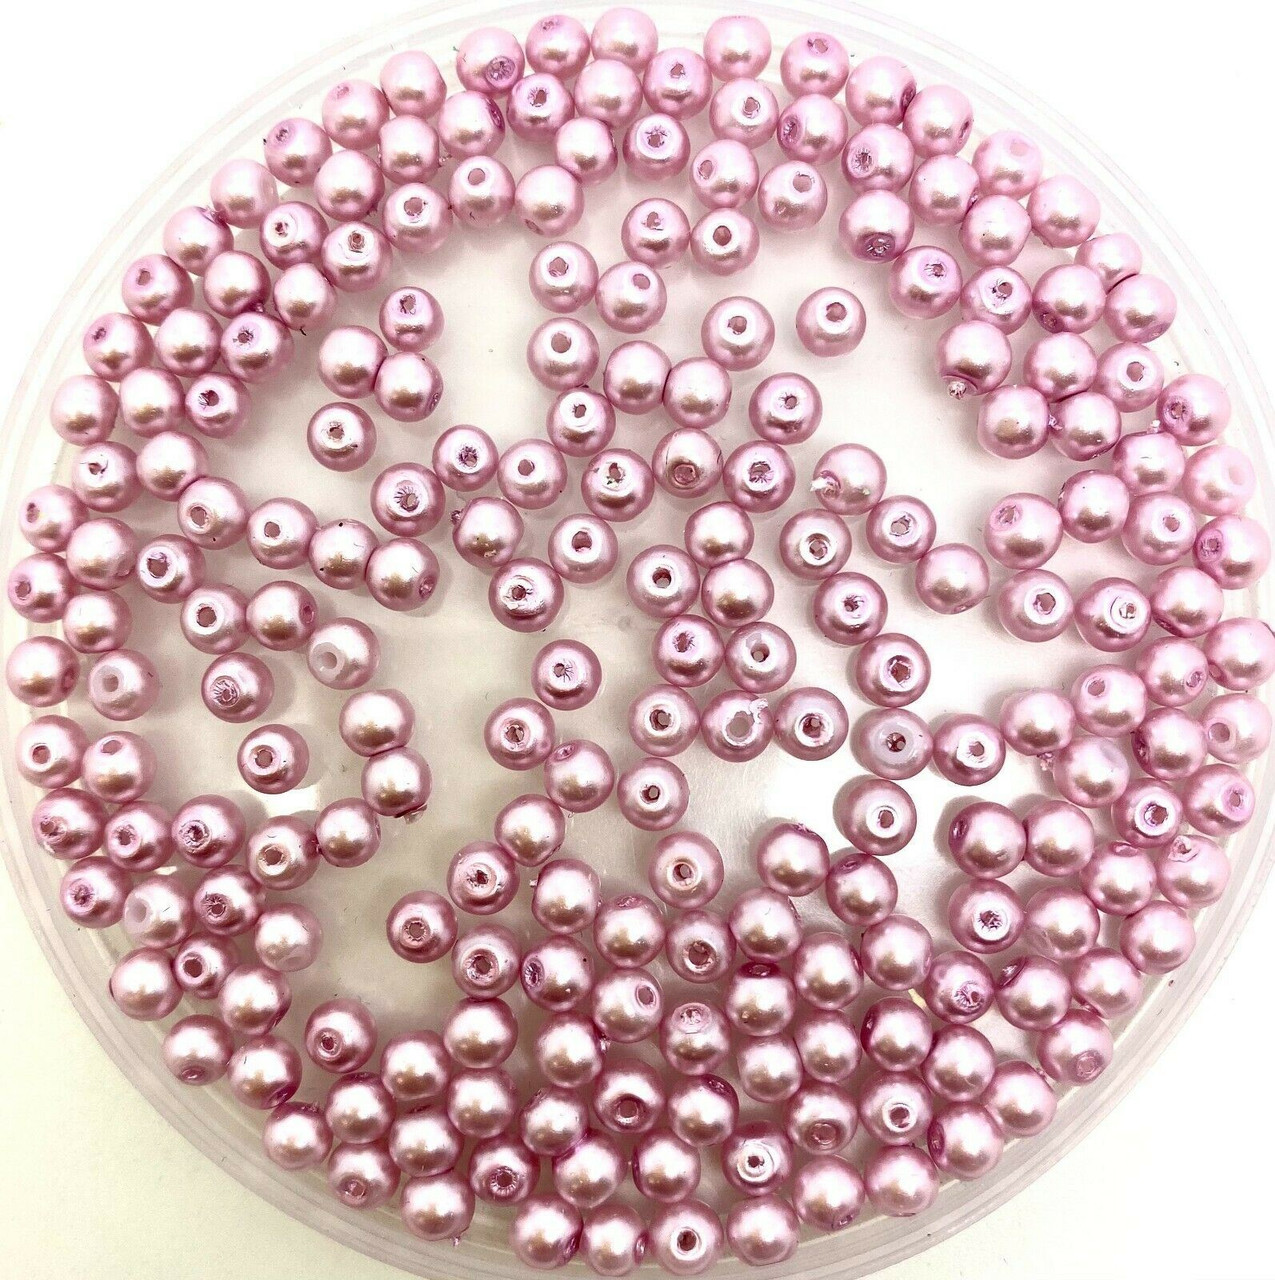 Misty Mauve 3mm Glass Pearls